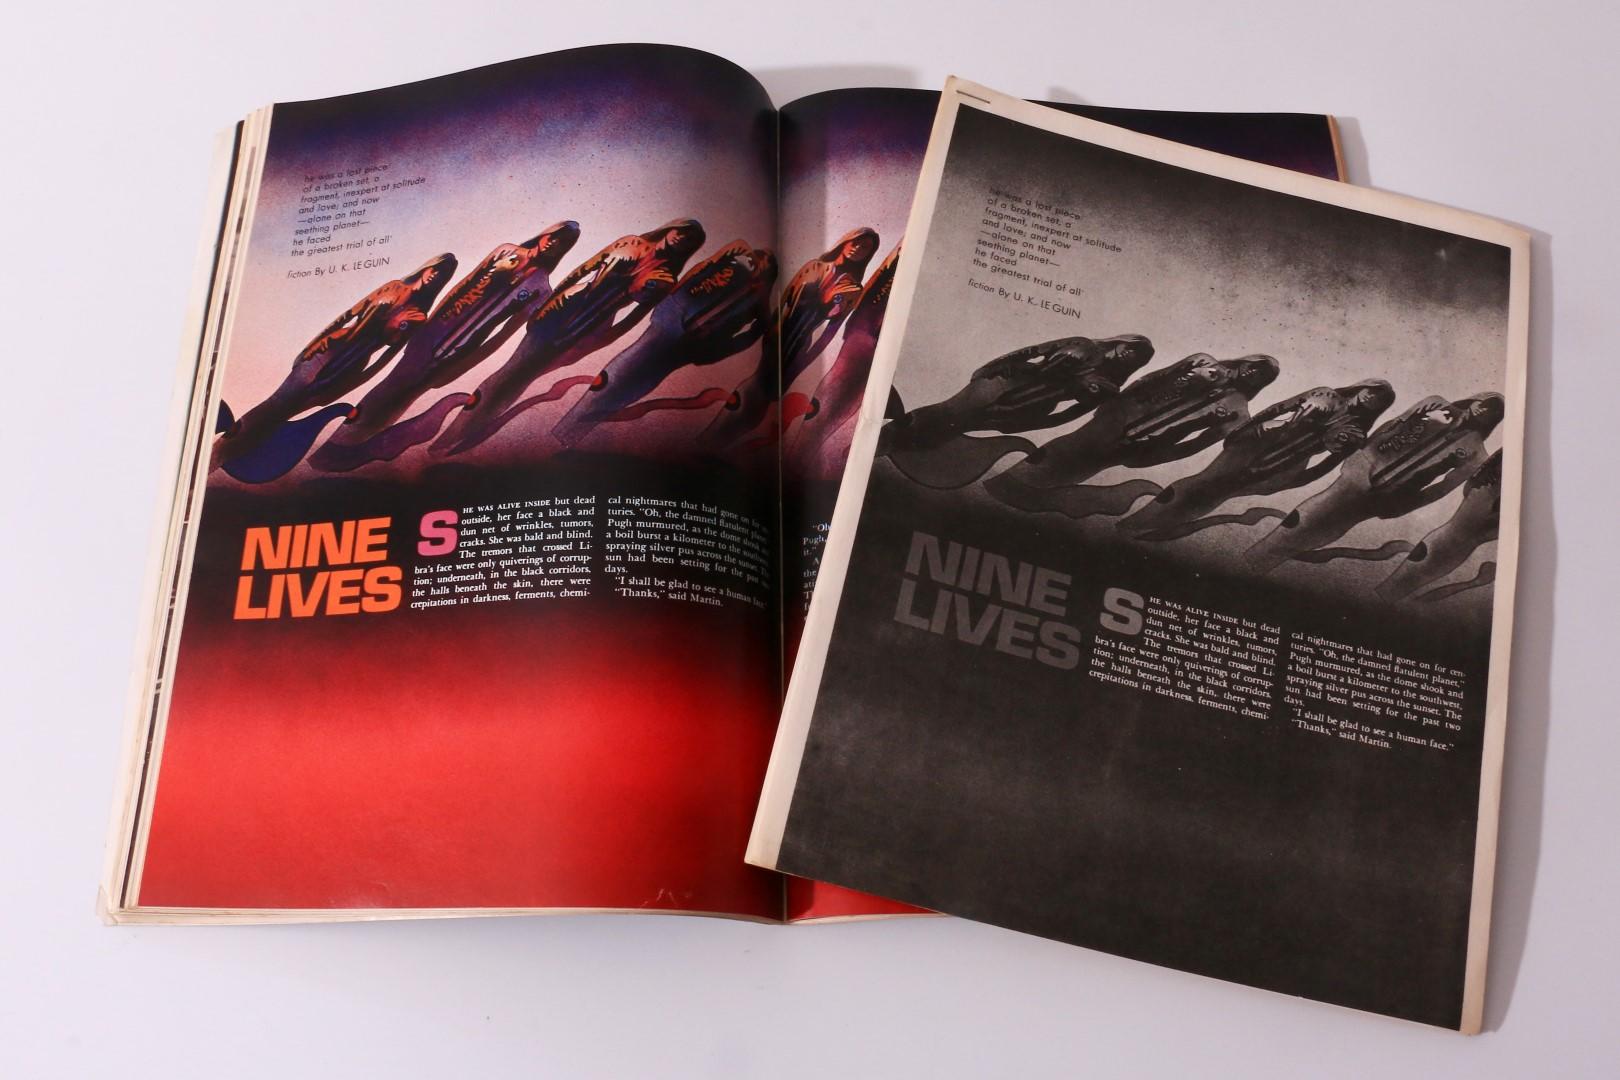 Ursula K. Le Guin - Nine Lives Proof Copy with November 1969 Playboy Magazine - HMH Publishing, 1969, Proof.